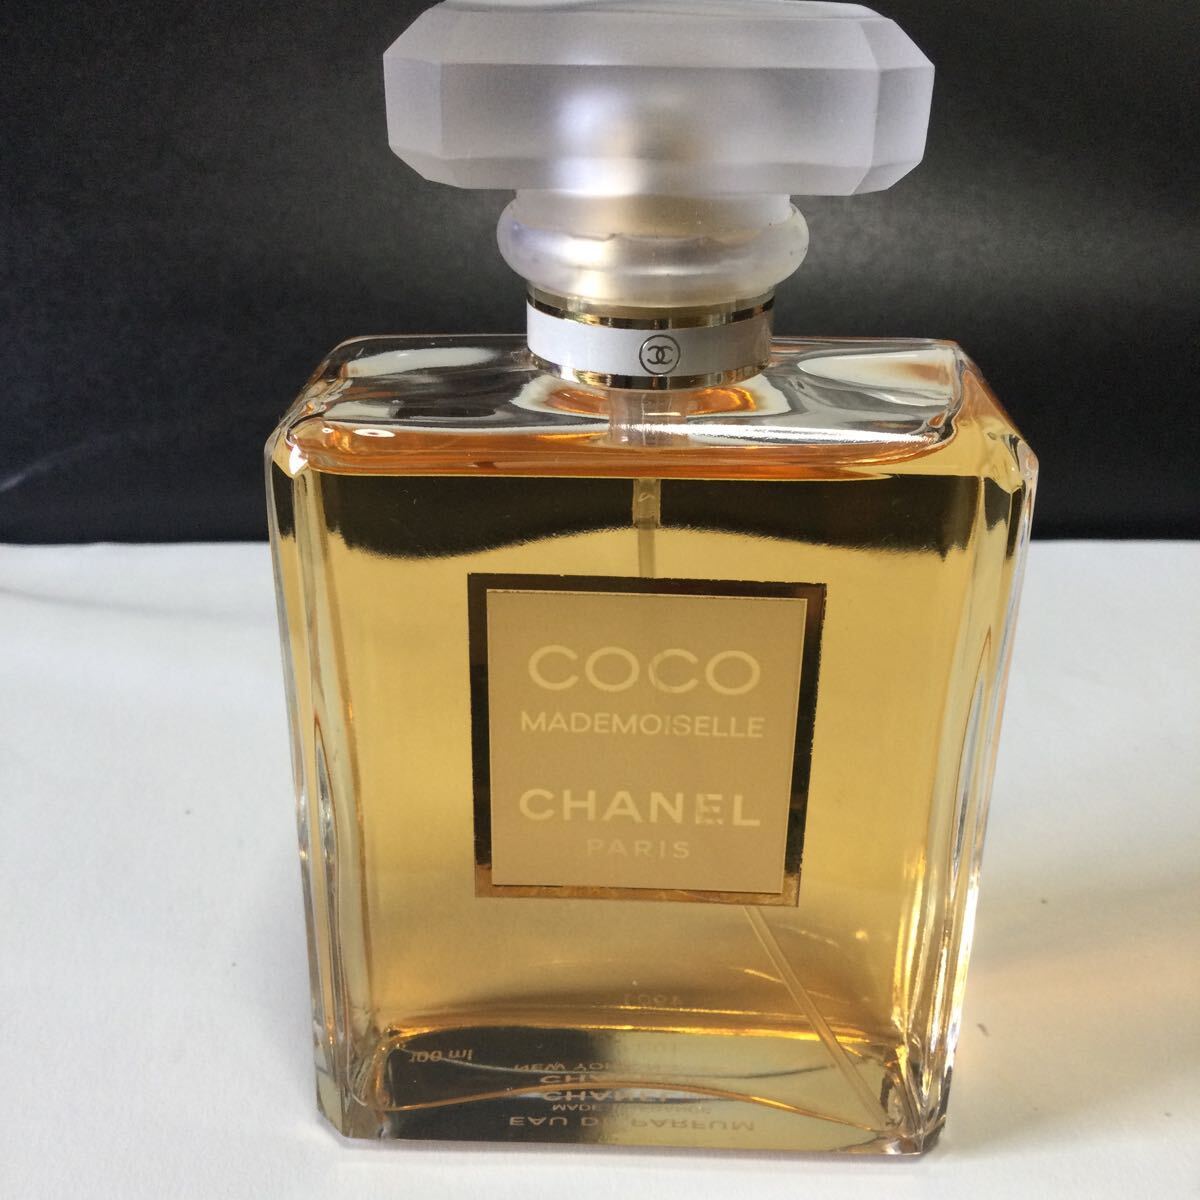  Chanel   coco  mademoiselle  EDP100ml  самая малость   количество  ...